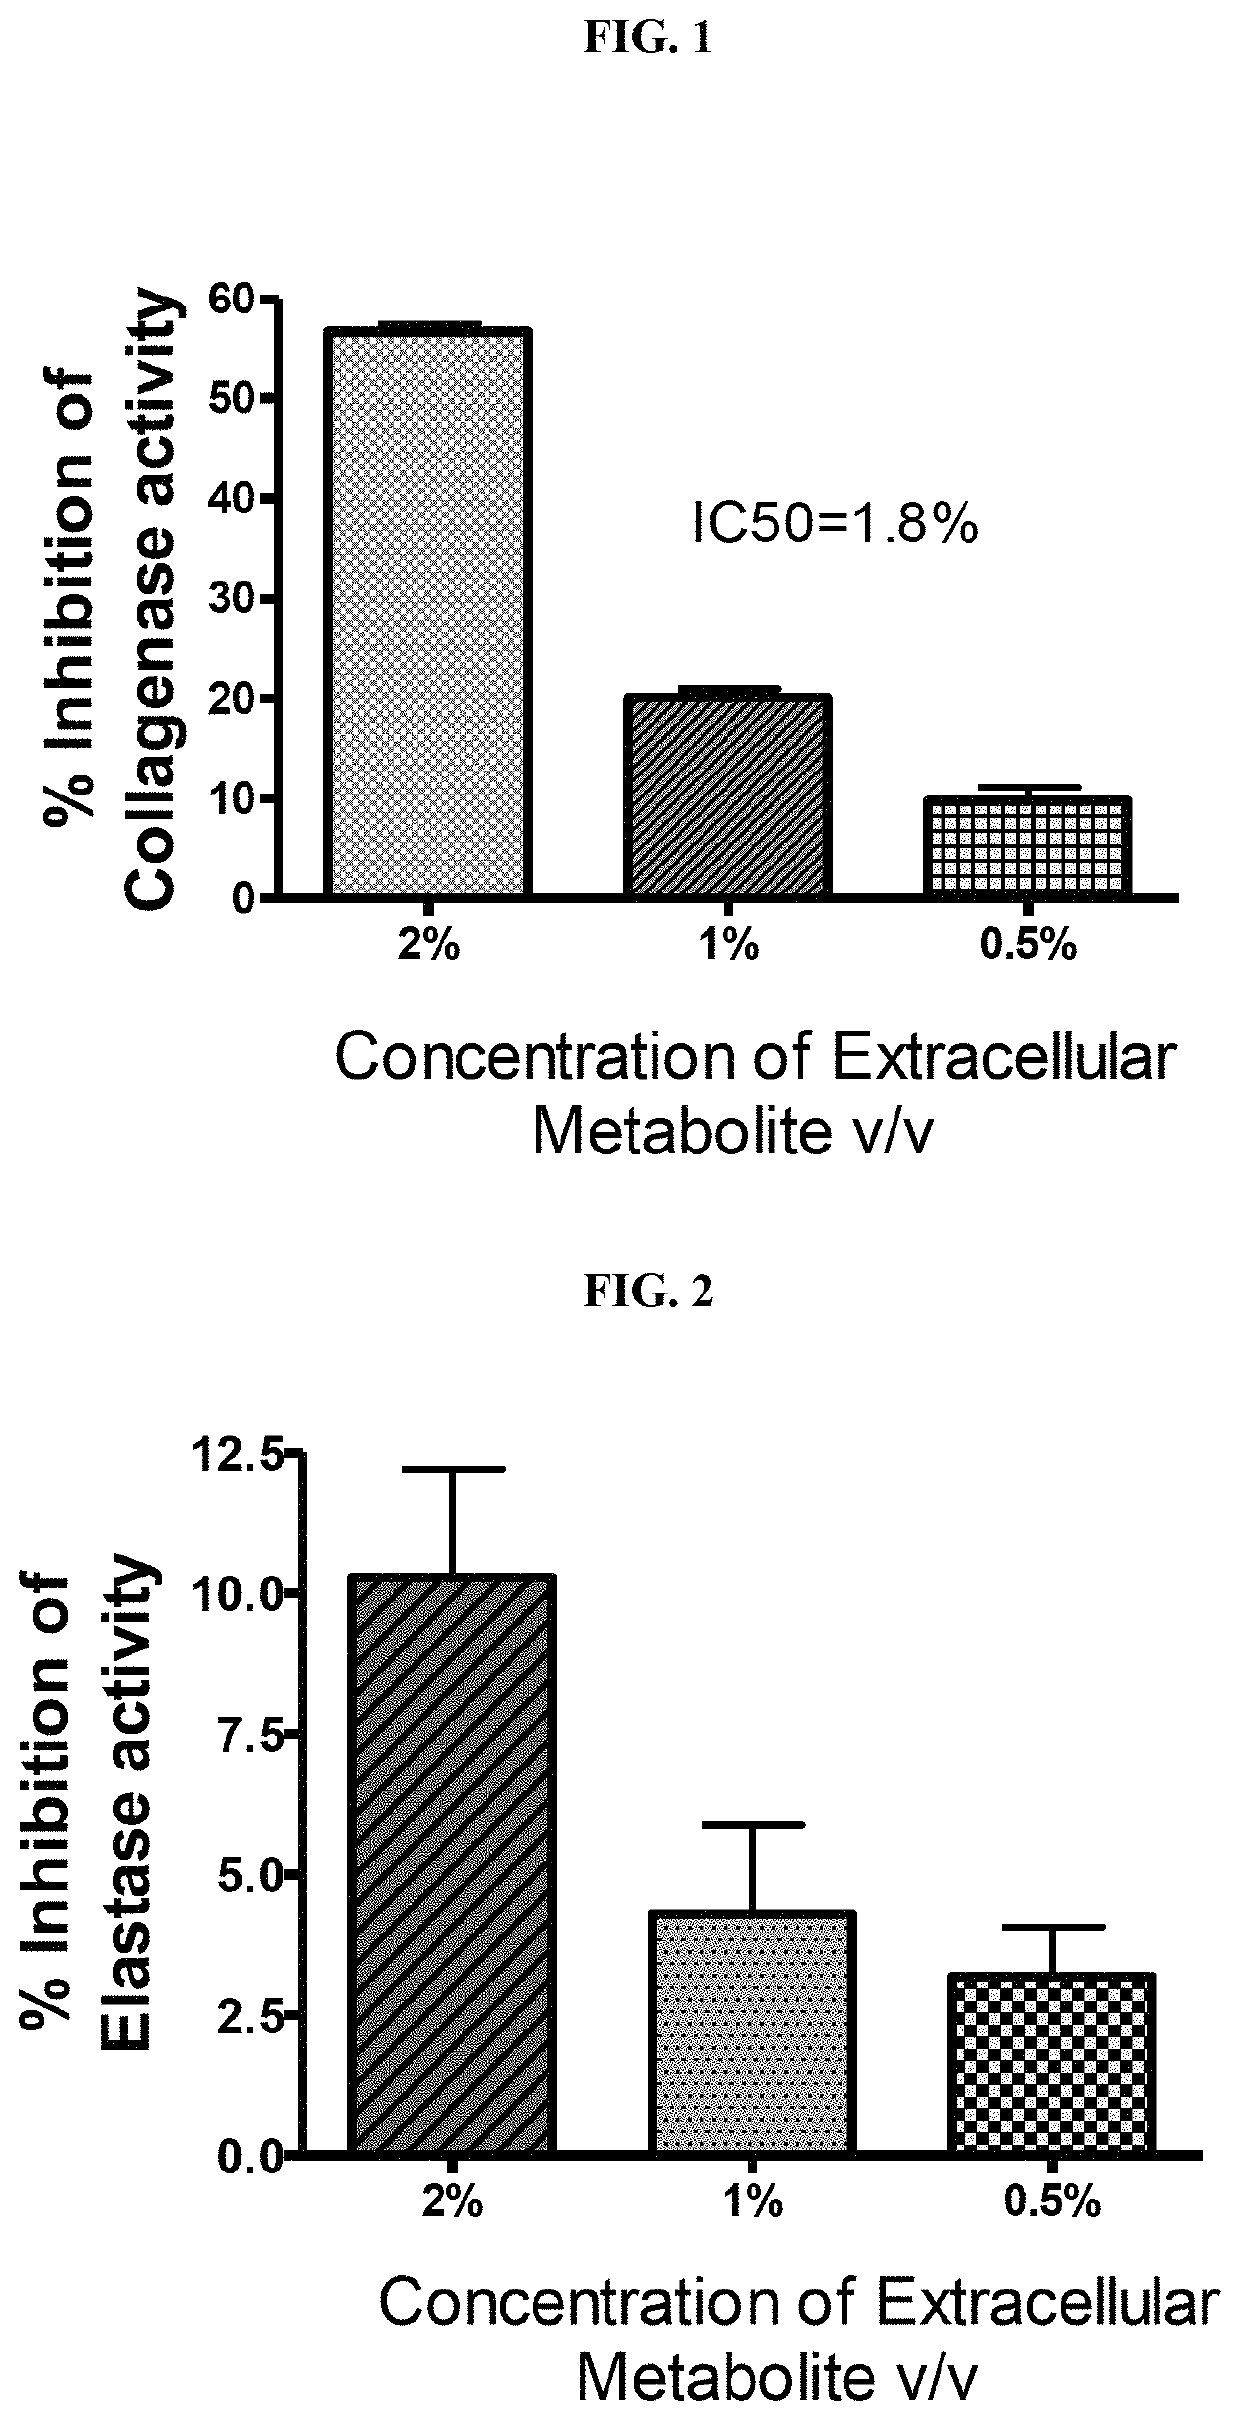 Anti-aging potential of extracellular metabolite isolated from <i>Bacillus coagulans </i>MTCC 5856